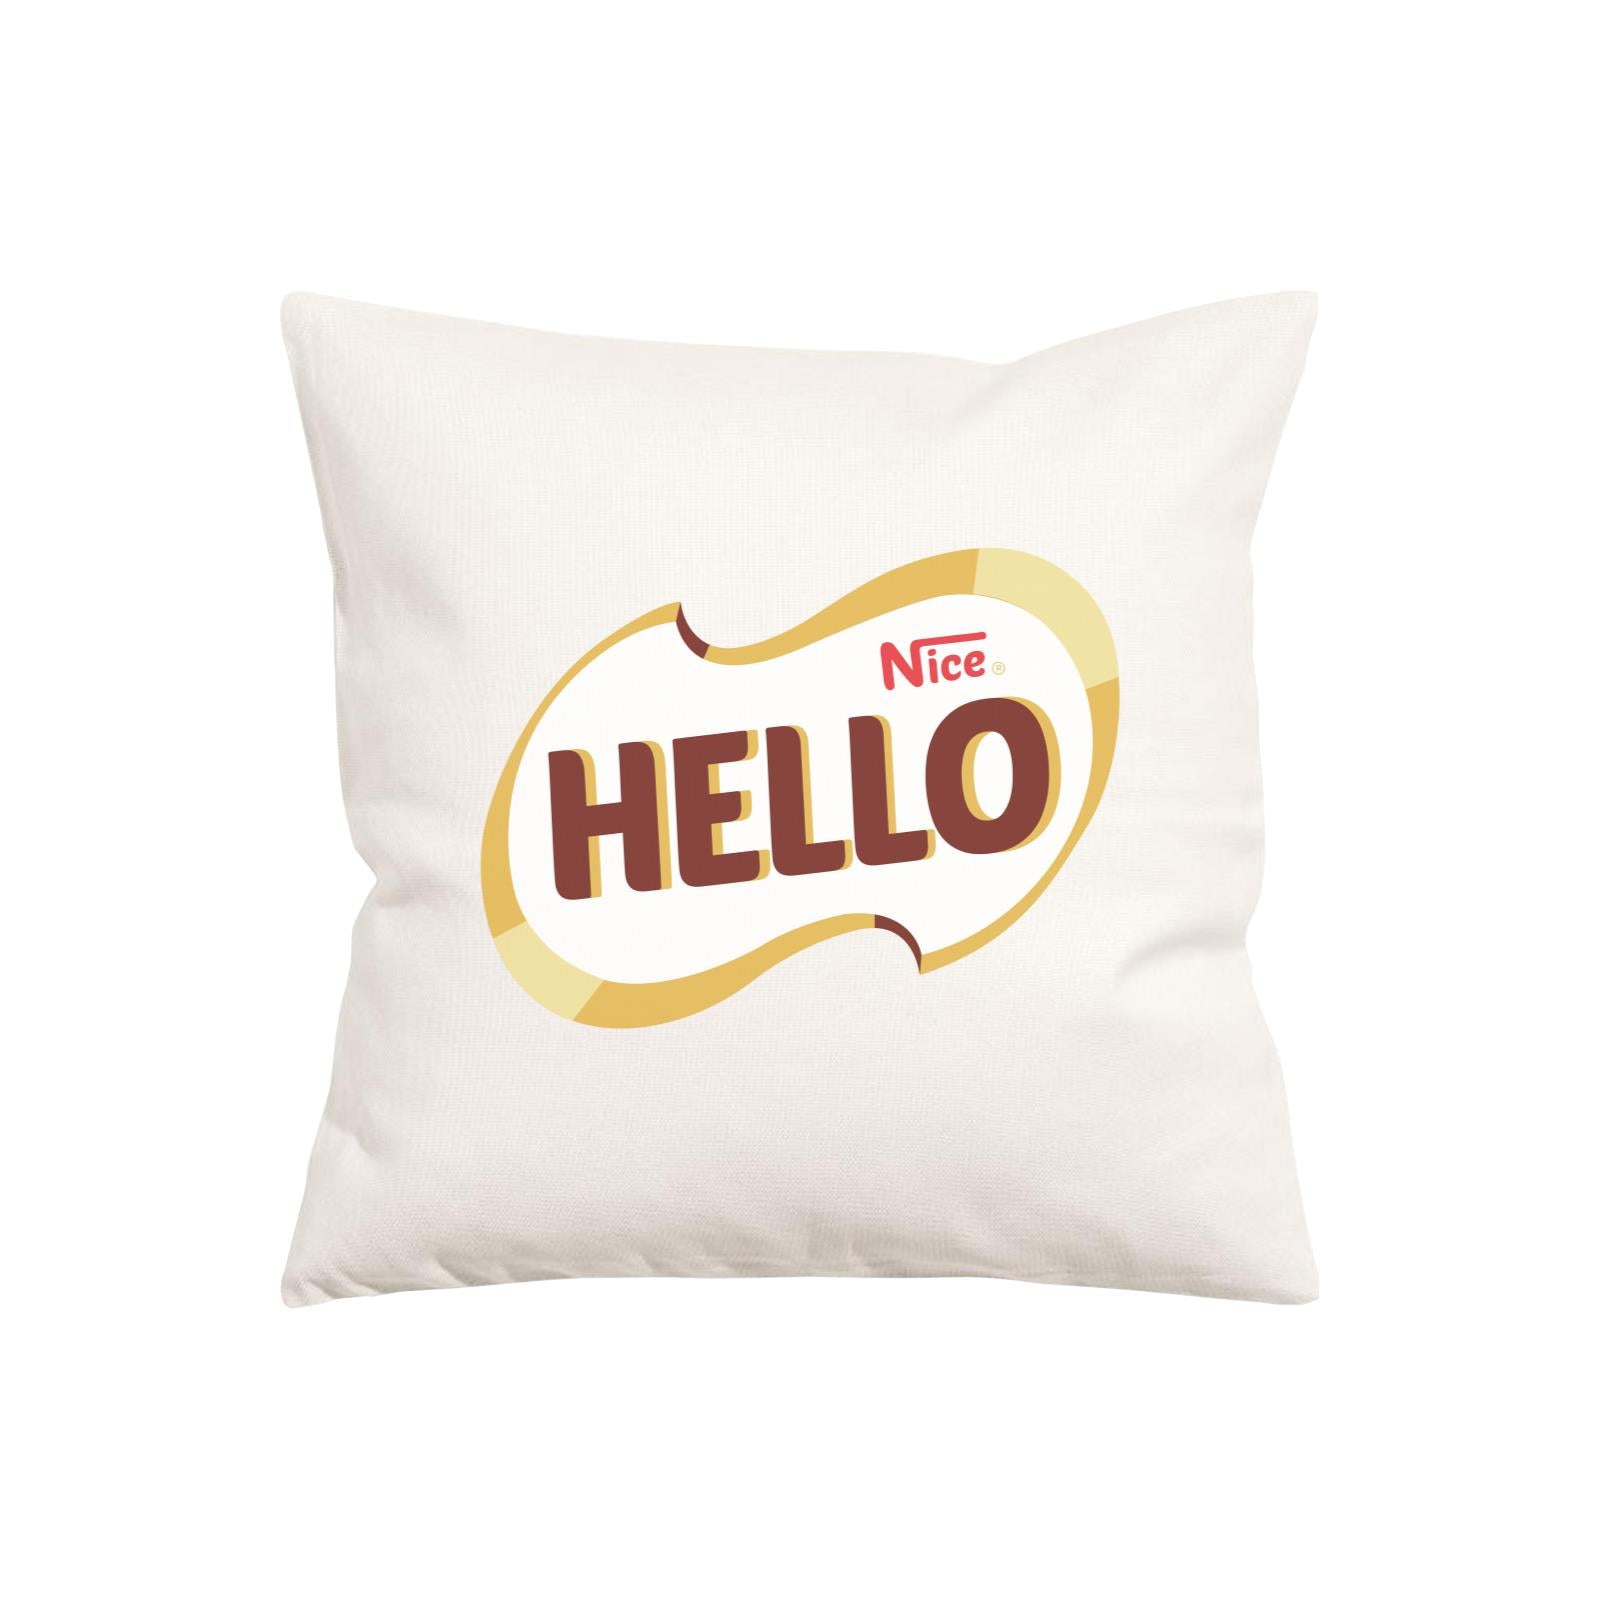 Slang Statement Hello Nice Pillow Cushion